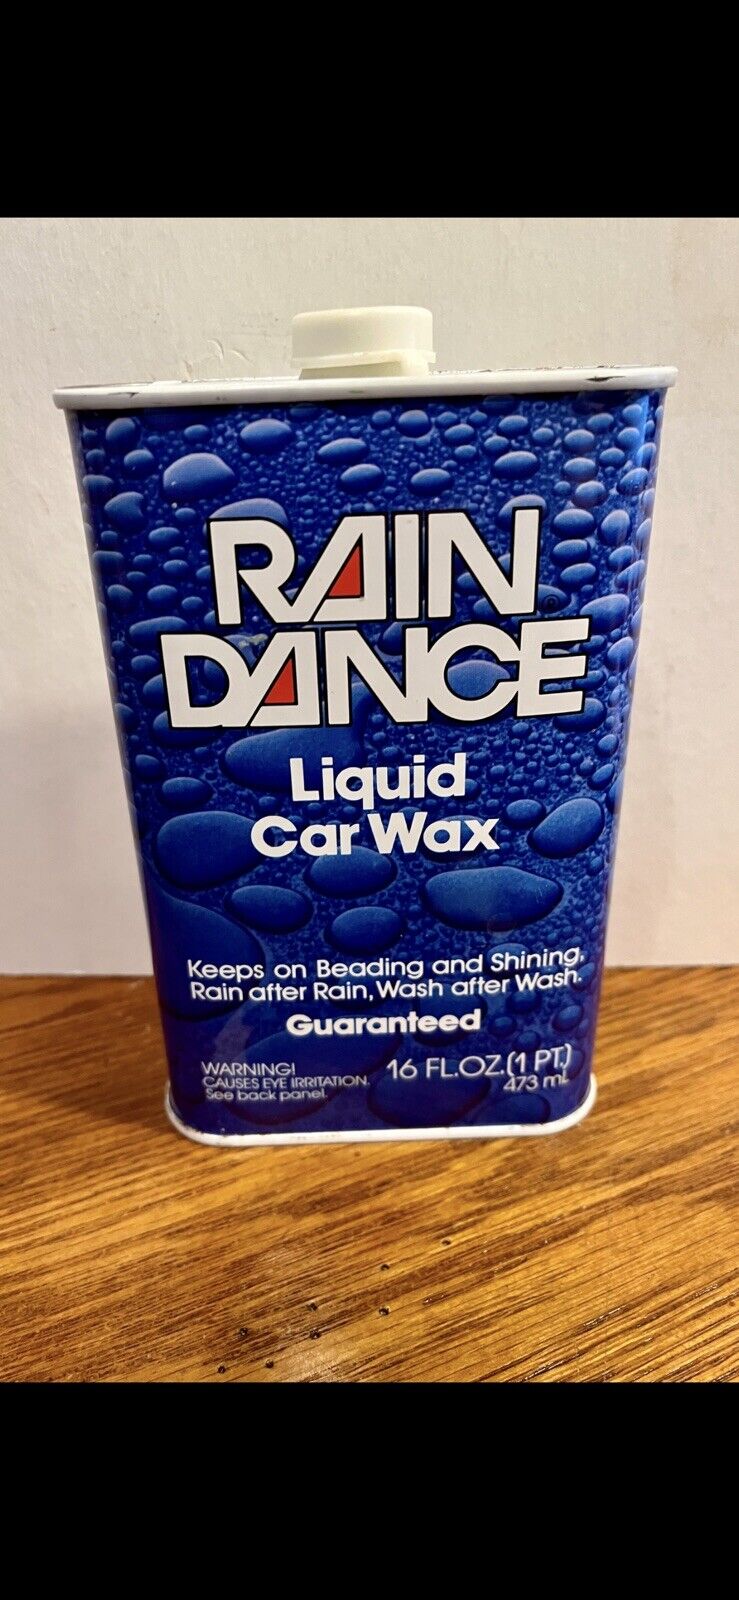 Vintage Rain Dance Liquid Car Wax, Metal Can,  16 oz, Clean and Empty